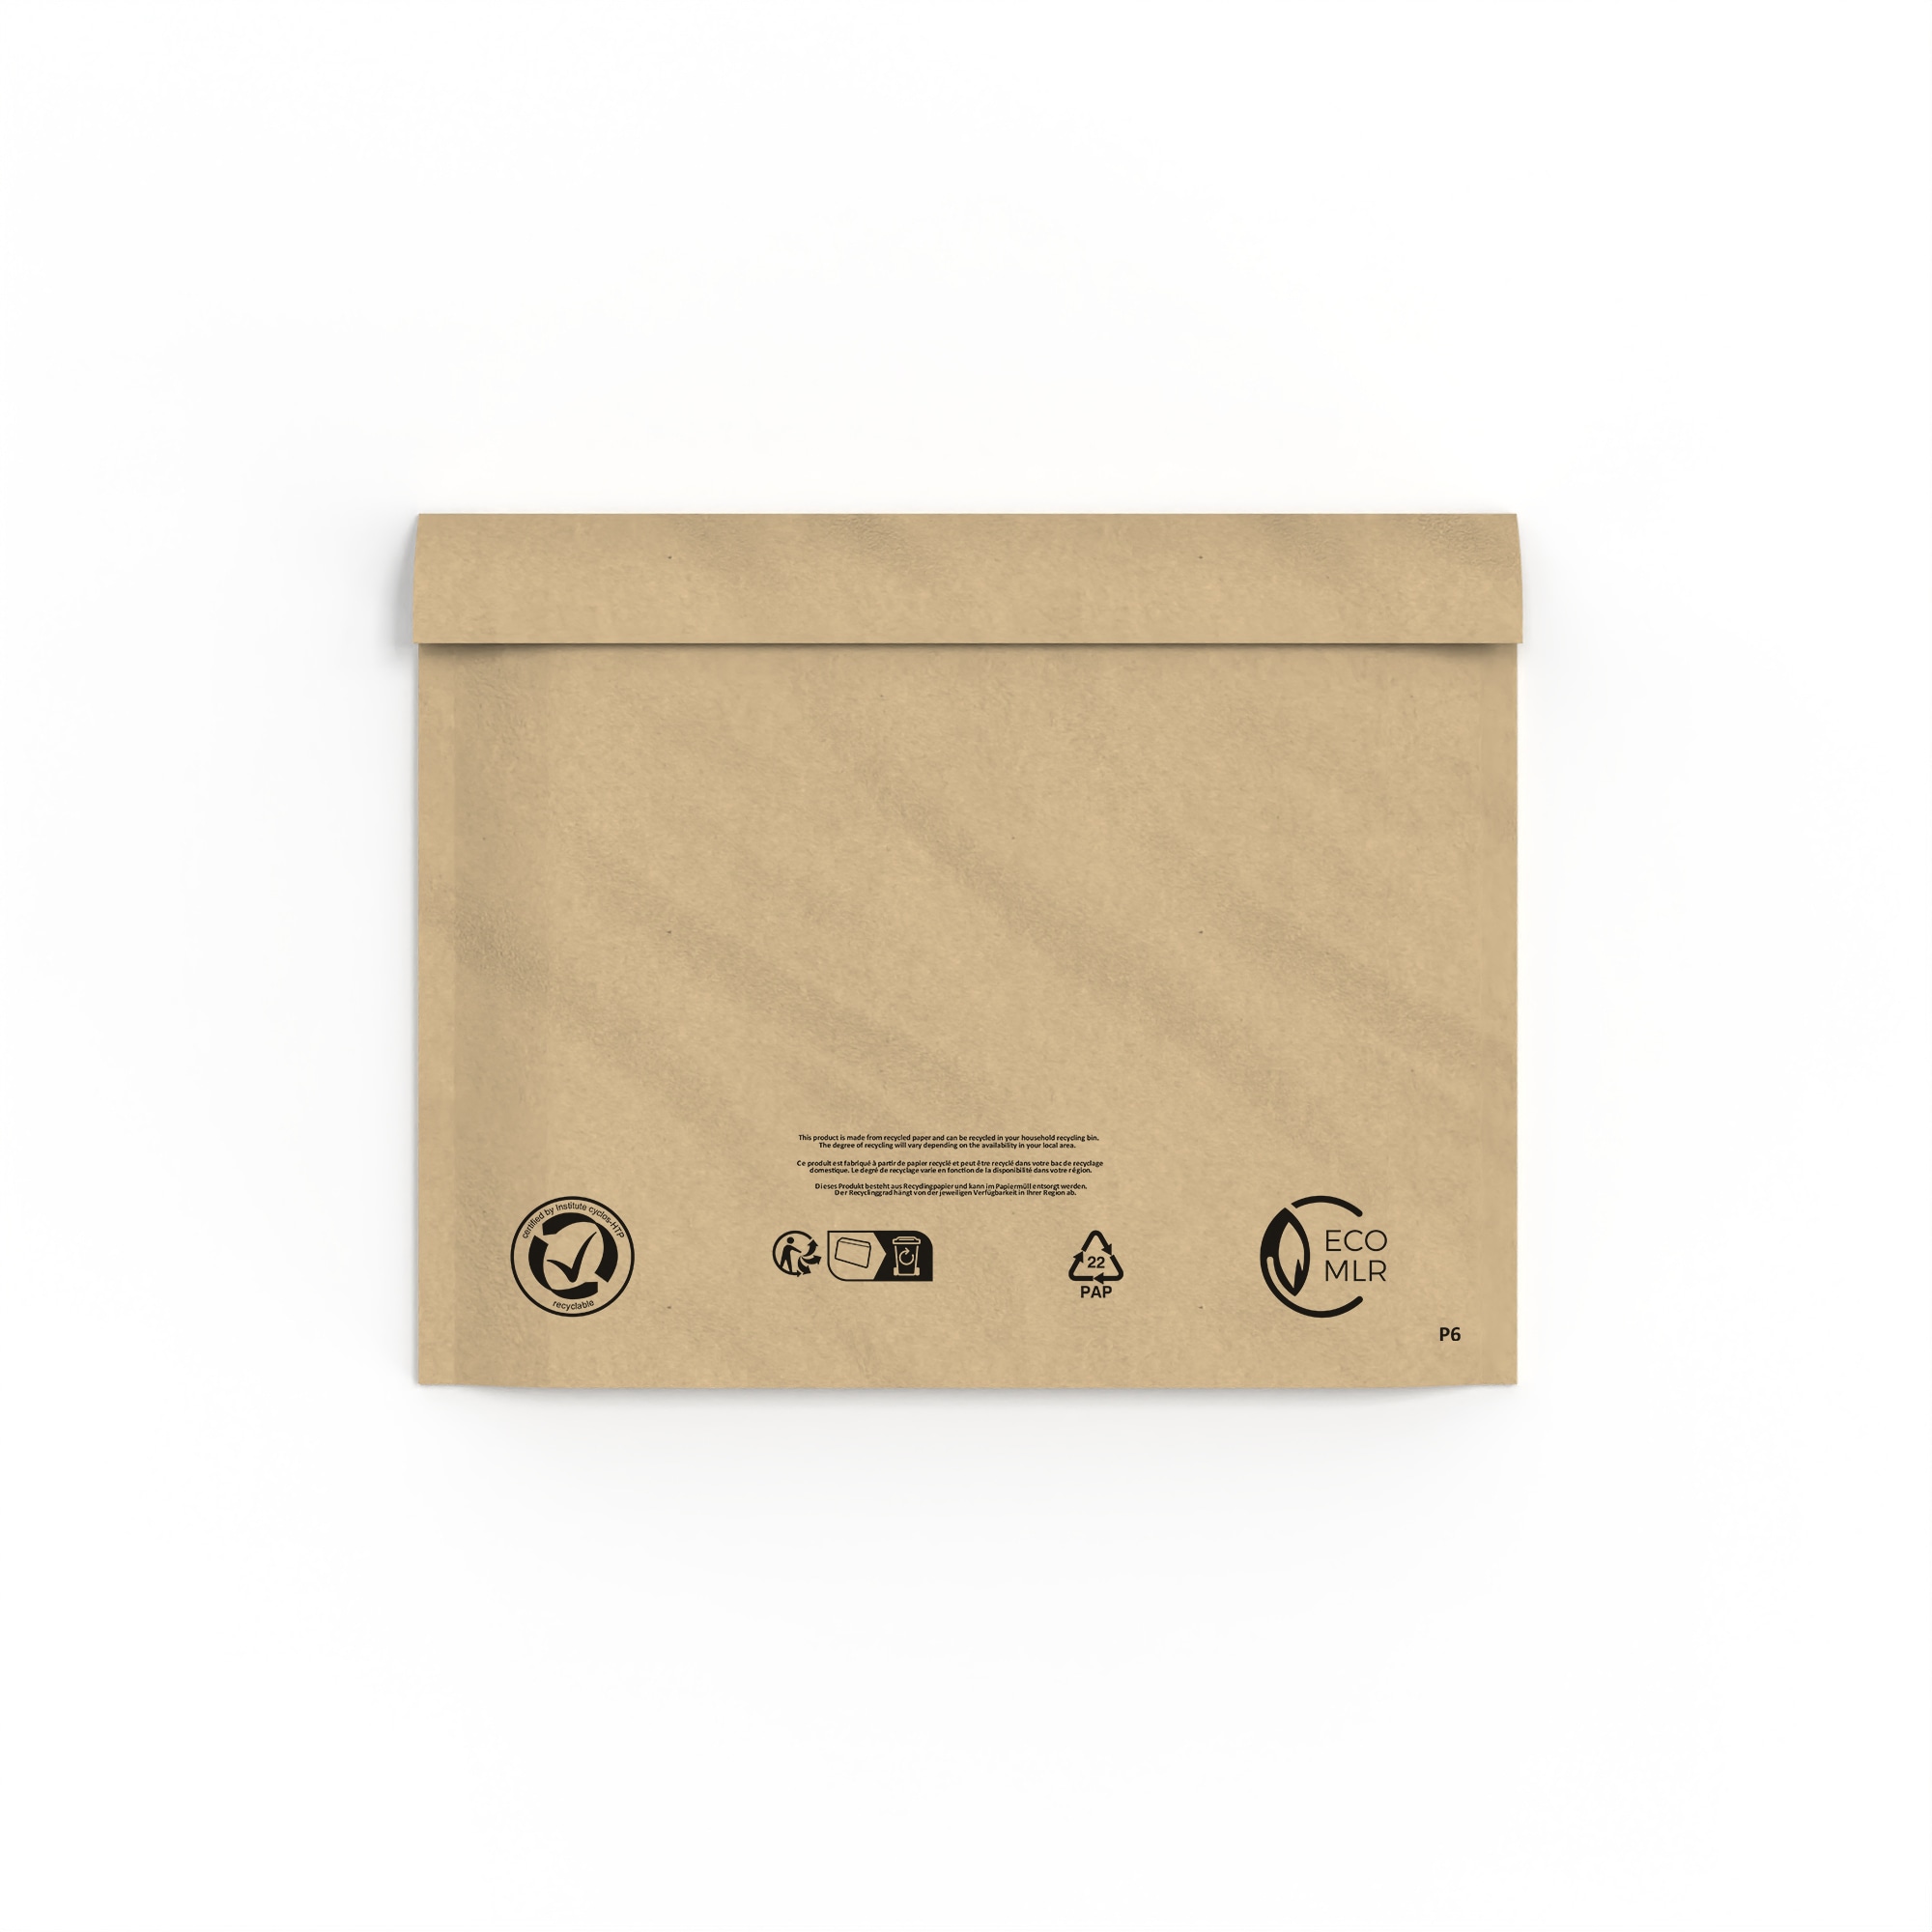 ECO manilla padded envelope - ecoMLR 225x286 mm